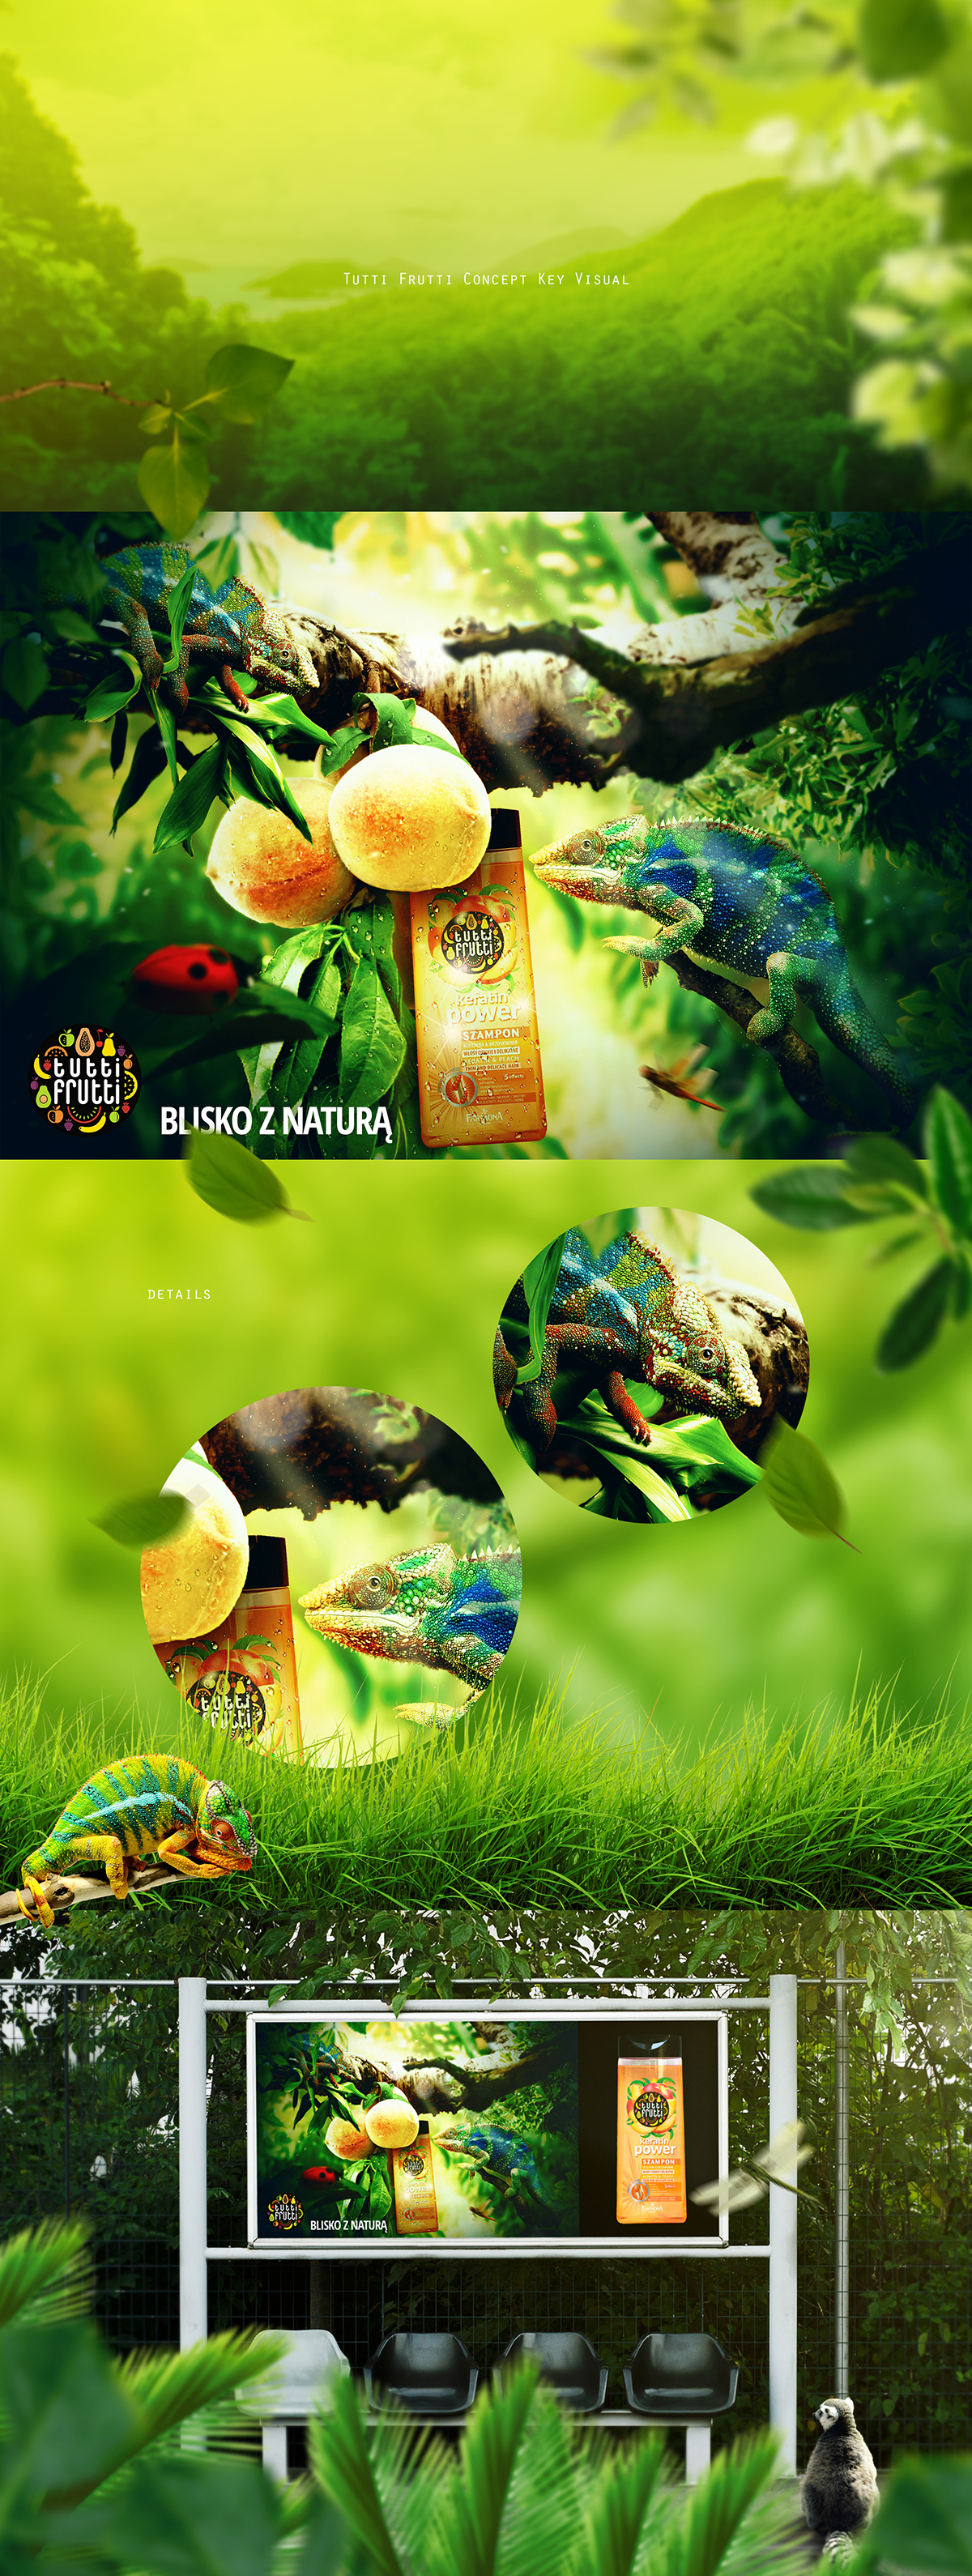 tutti frutti shampoo jungle Tropical fruits cosmetics Nature illustrate retouch chameleon green photo manipulation photomanipulation key visual